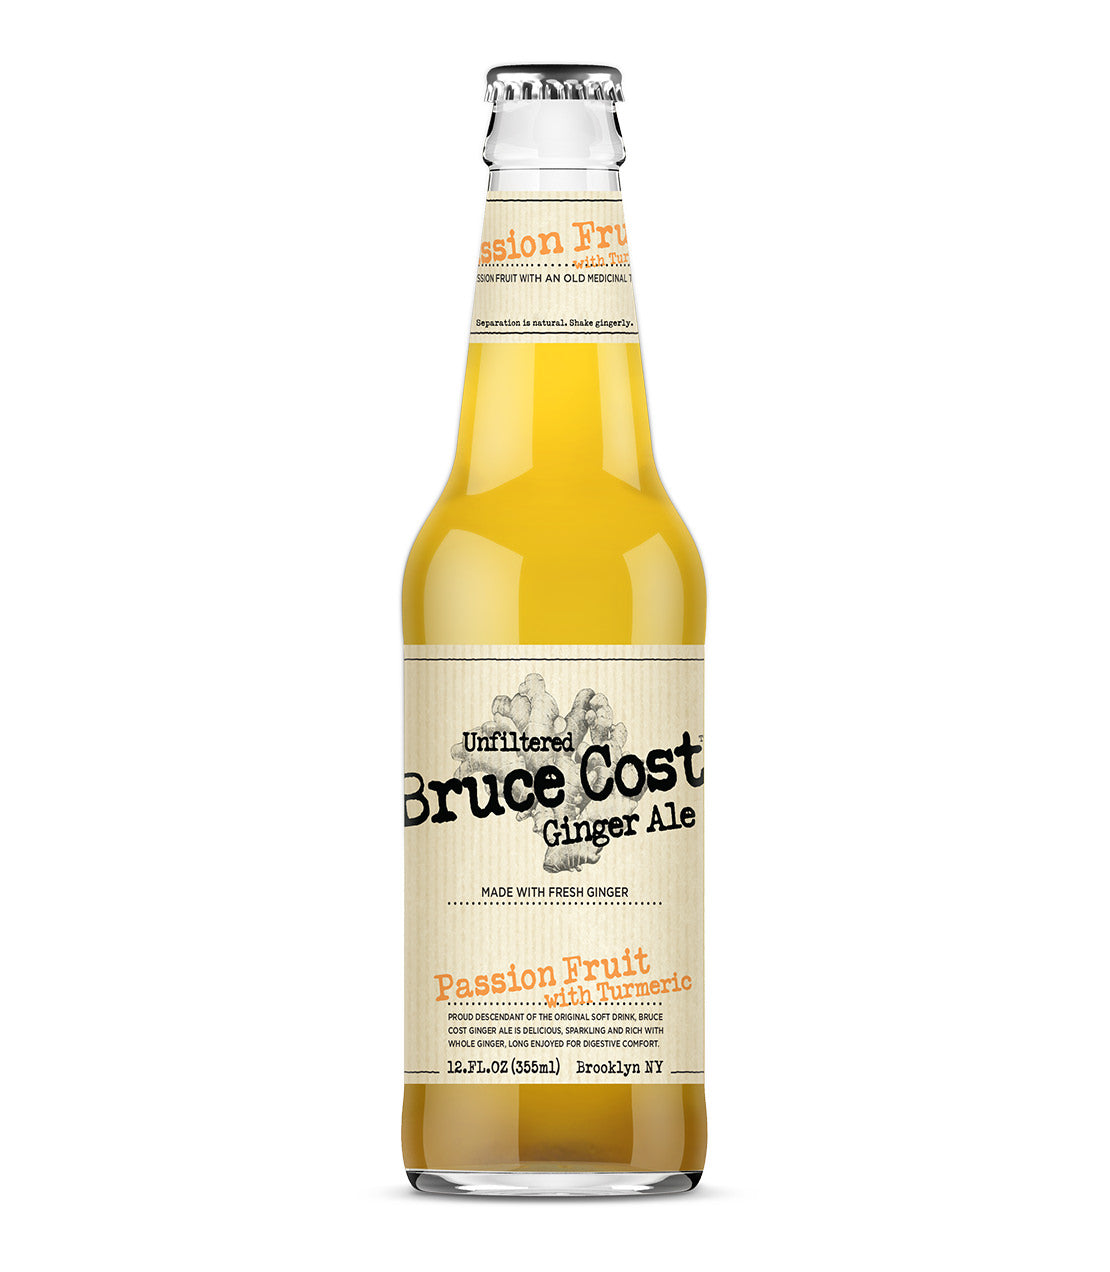 Bruce Cost Ginger Ale Passion Fruit - 12 oz. Bottle Case of 12 Bottles - Harney & Sons Fine Teas